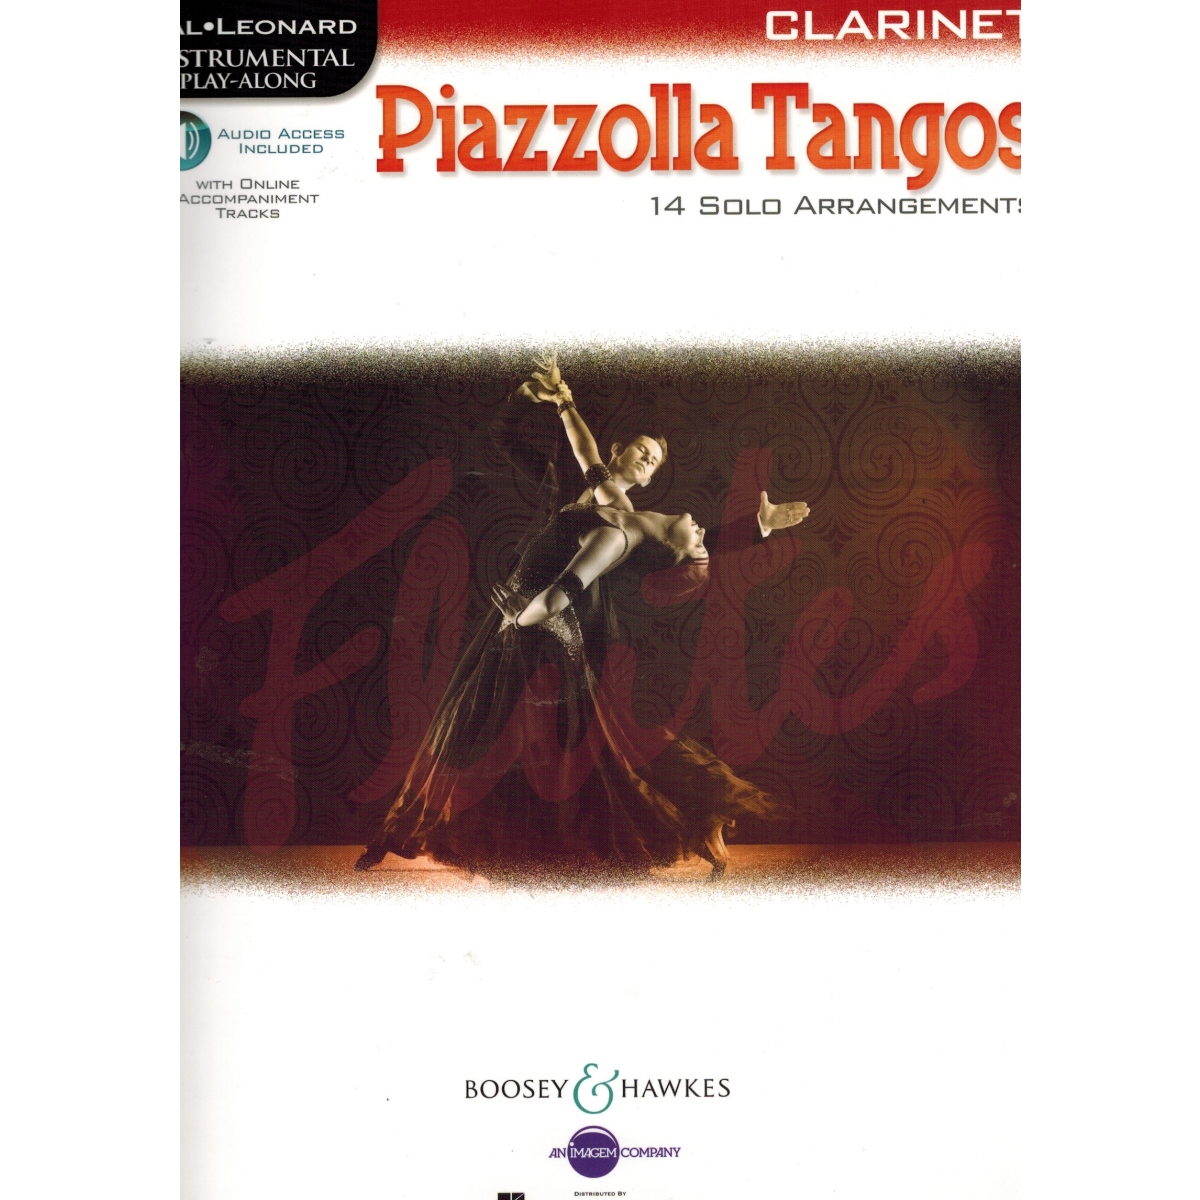 Piazzolla Tangos [Clarinet]